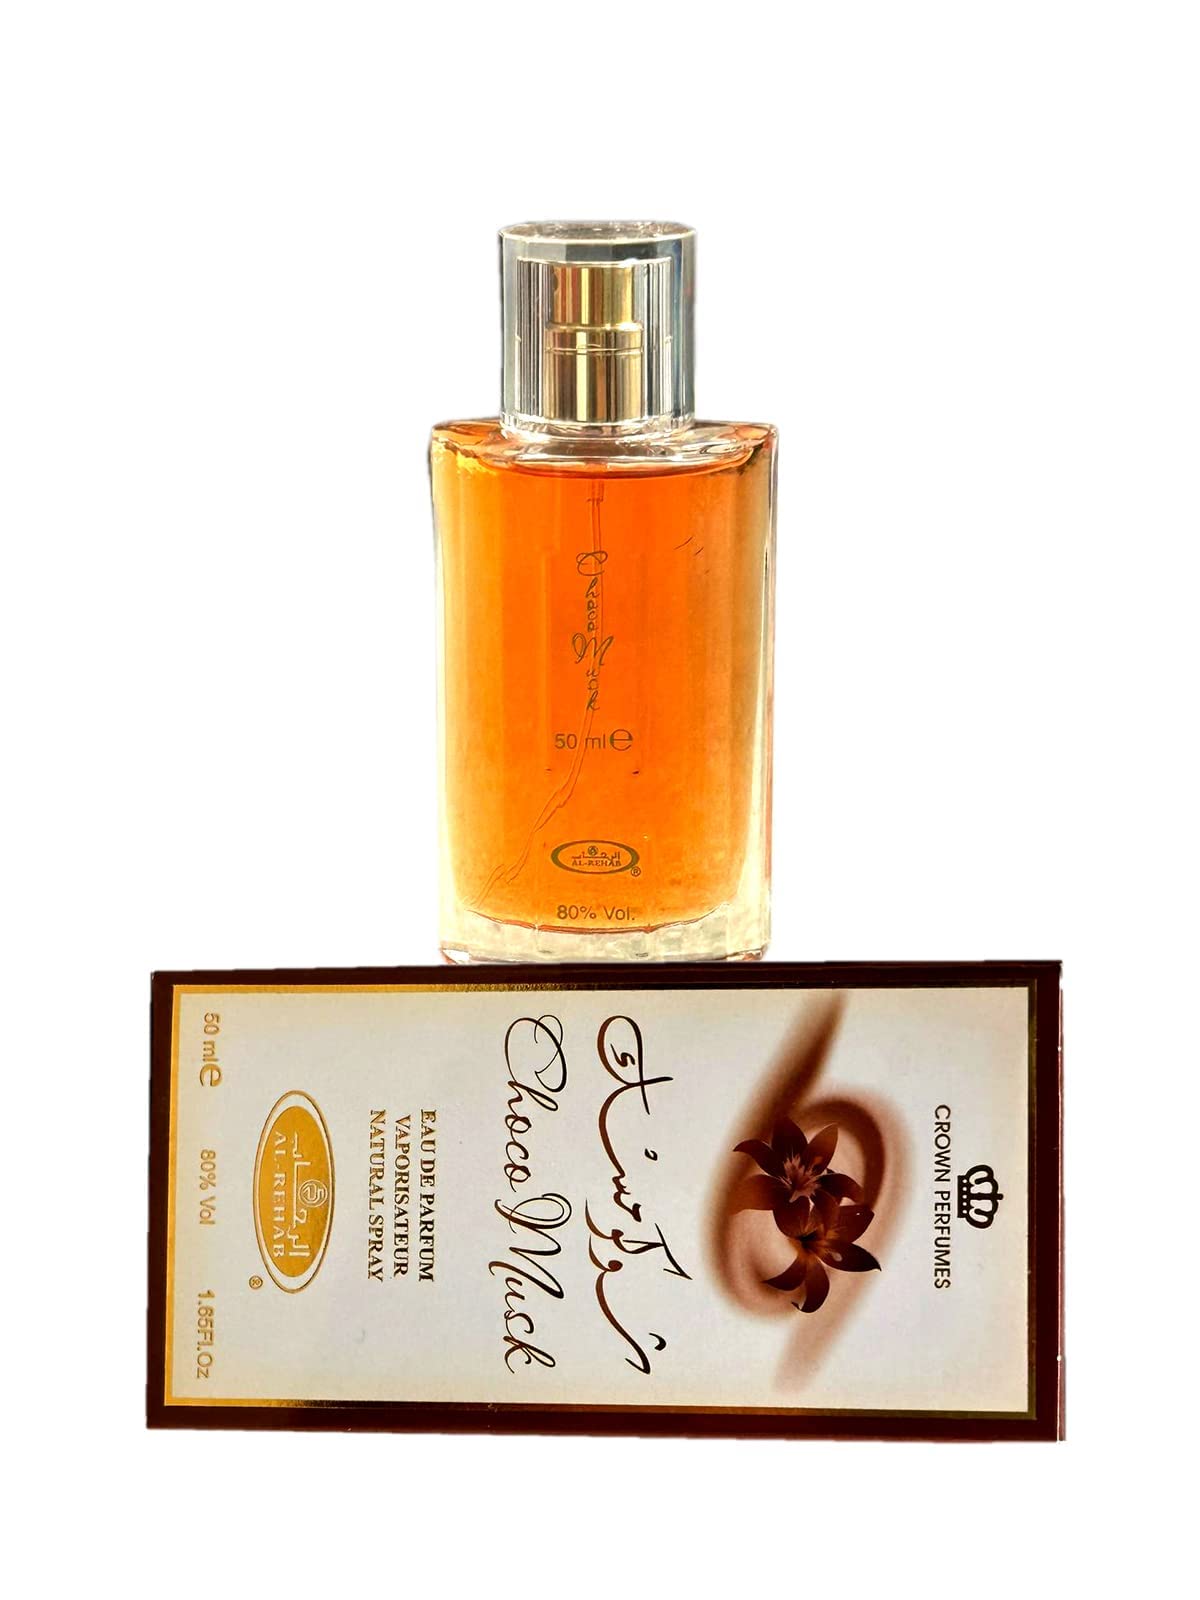 Choco Musk - Al-Rehab Eau De Spray Perfume (50 ml/1.65 fl. oz)